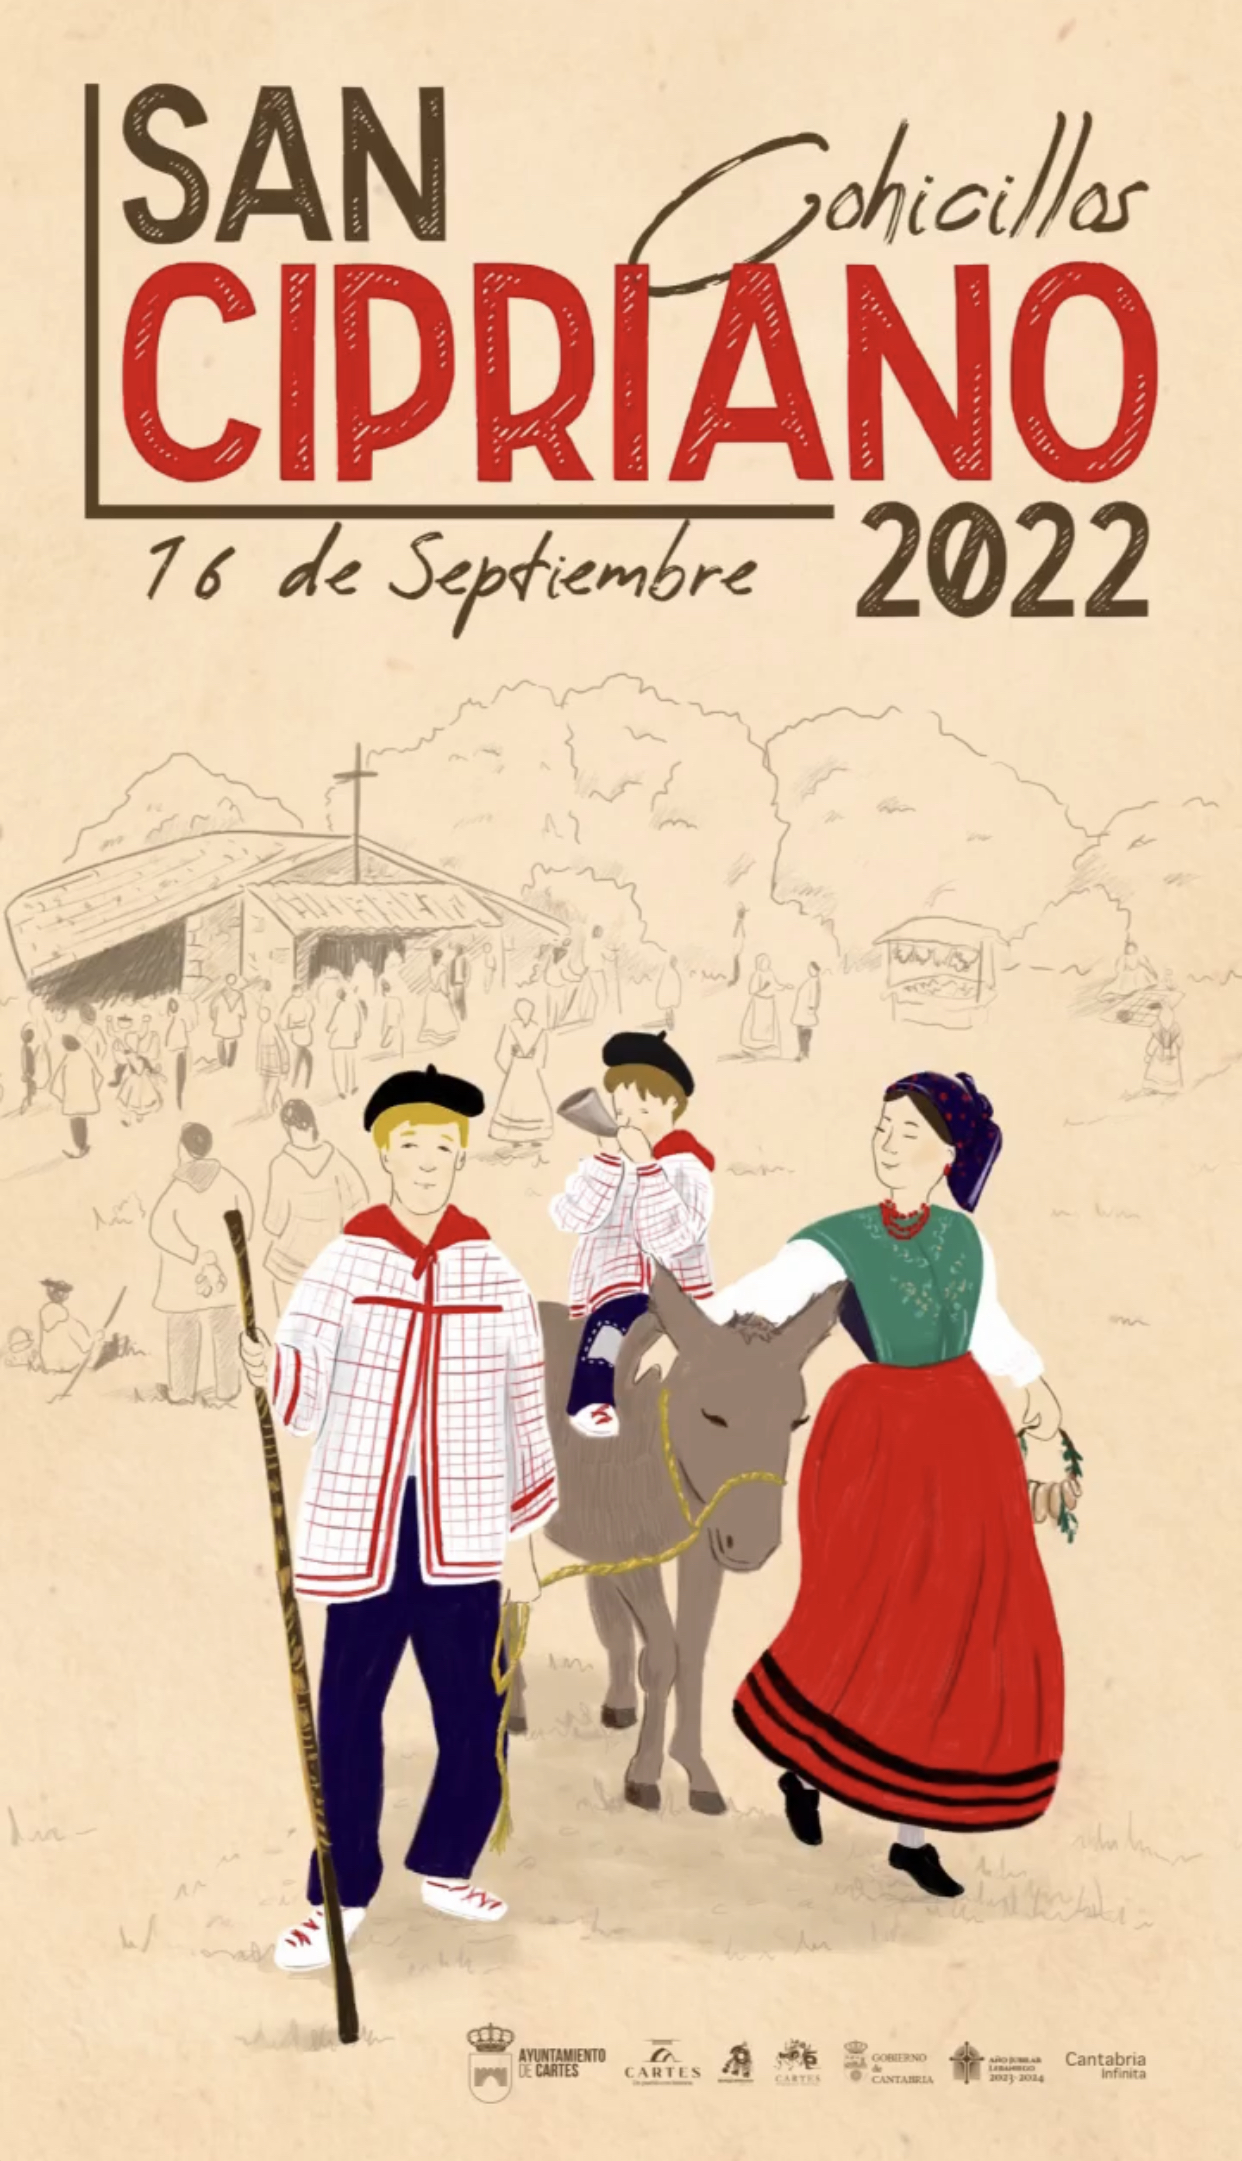 San Cipriano Cohicillos 2022